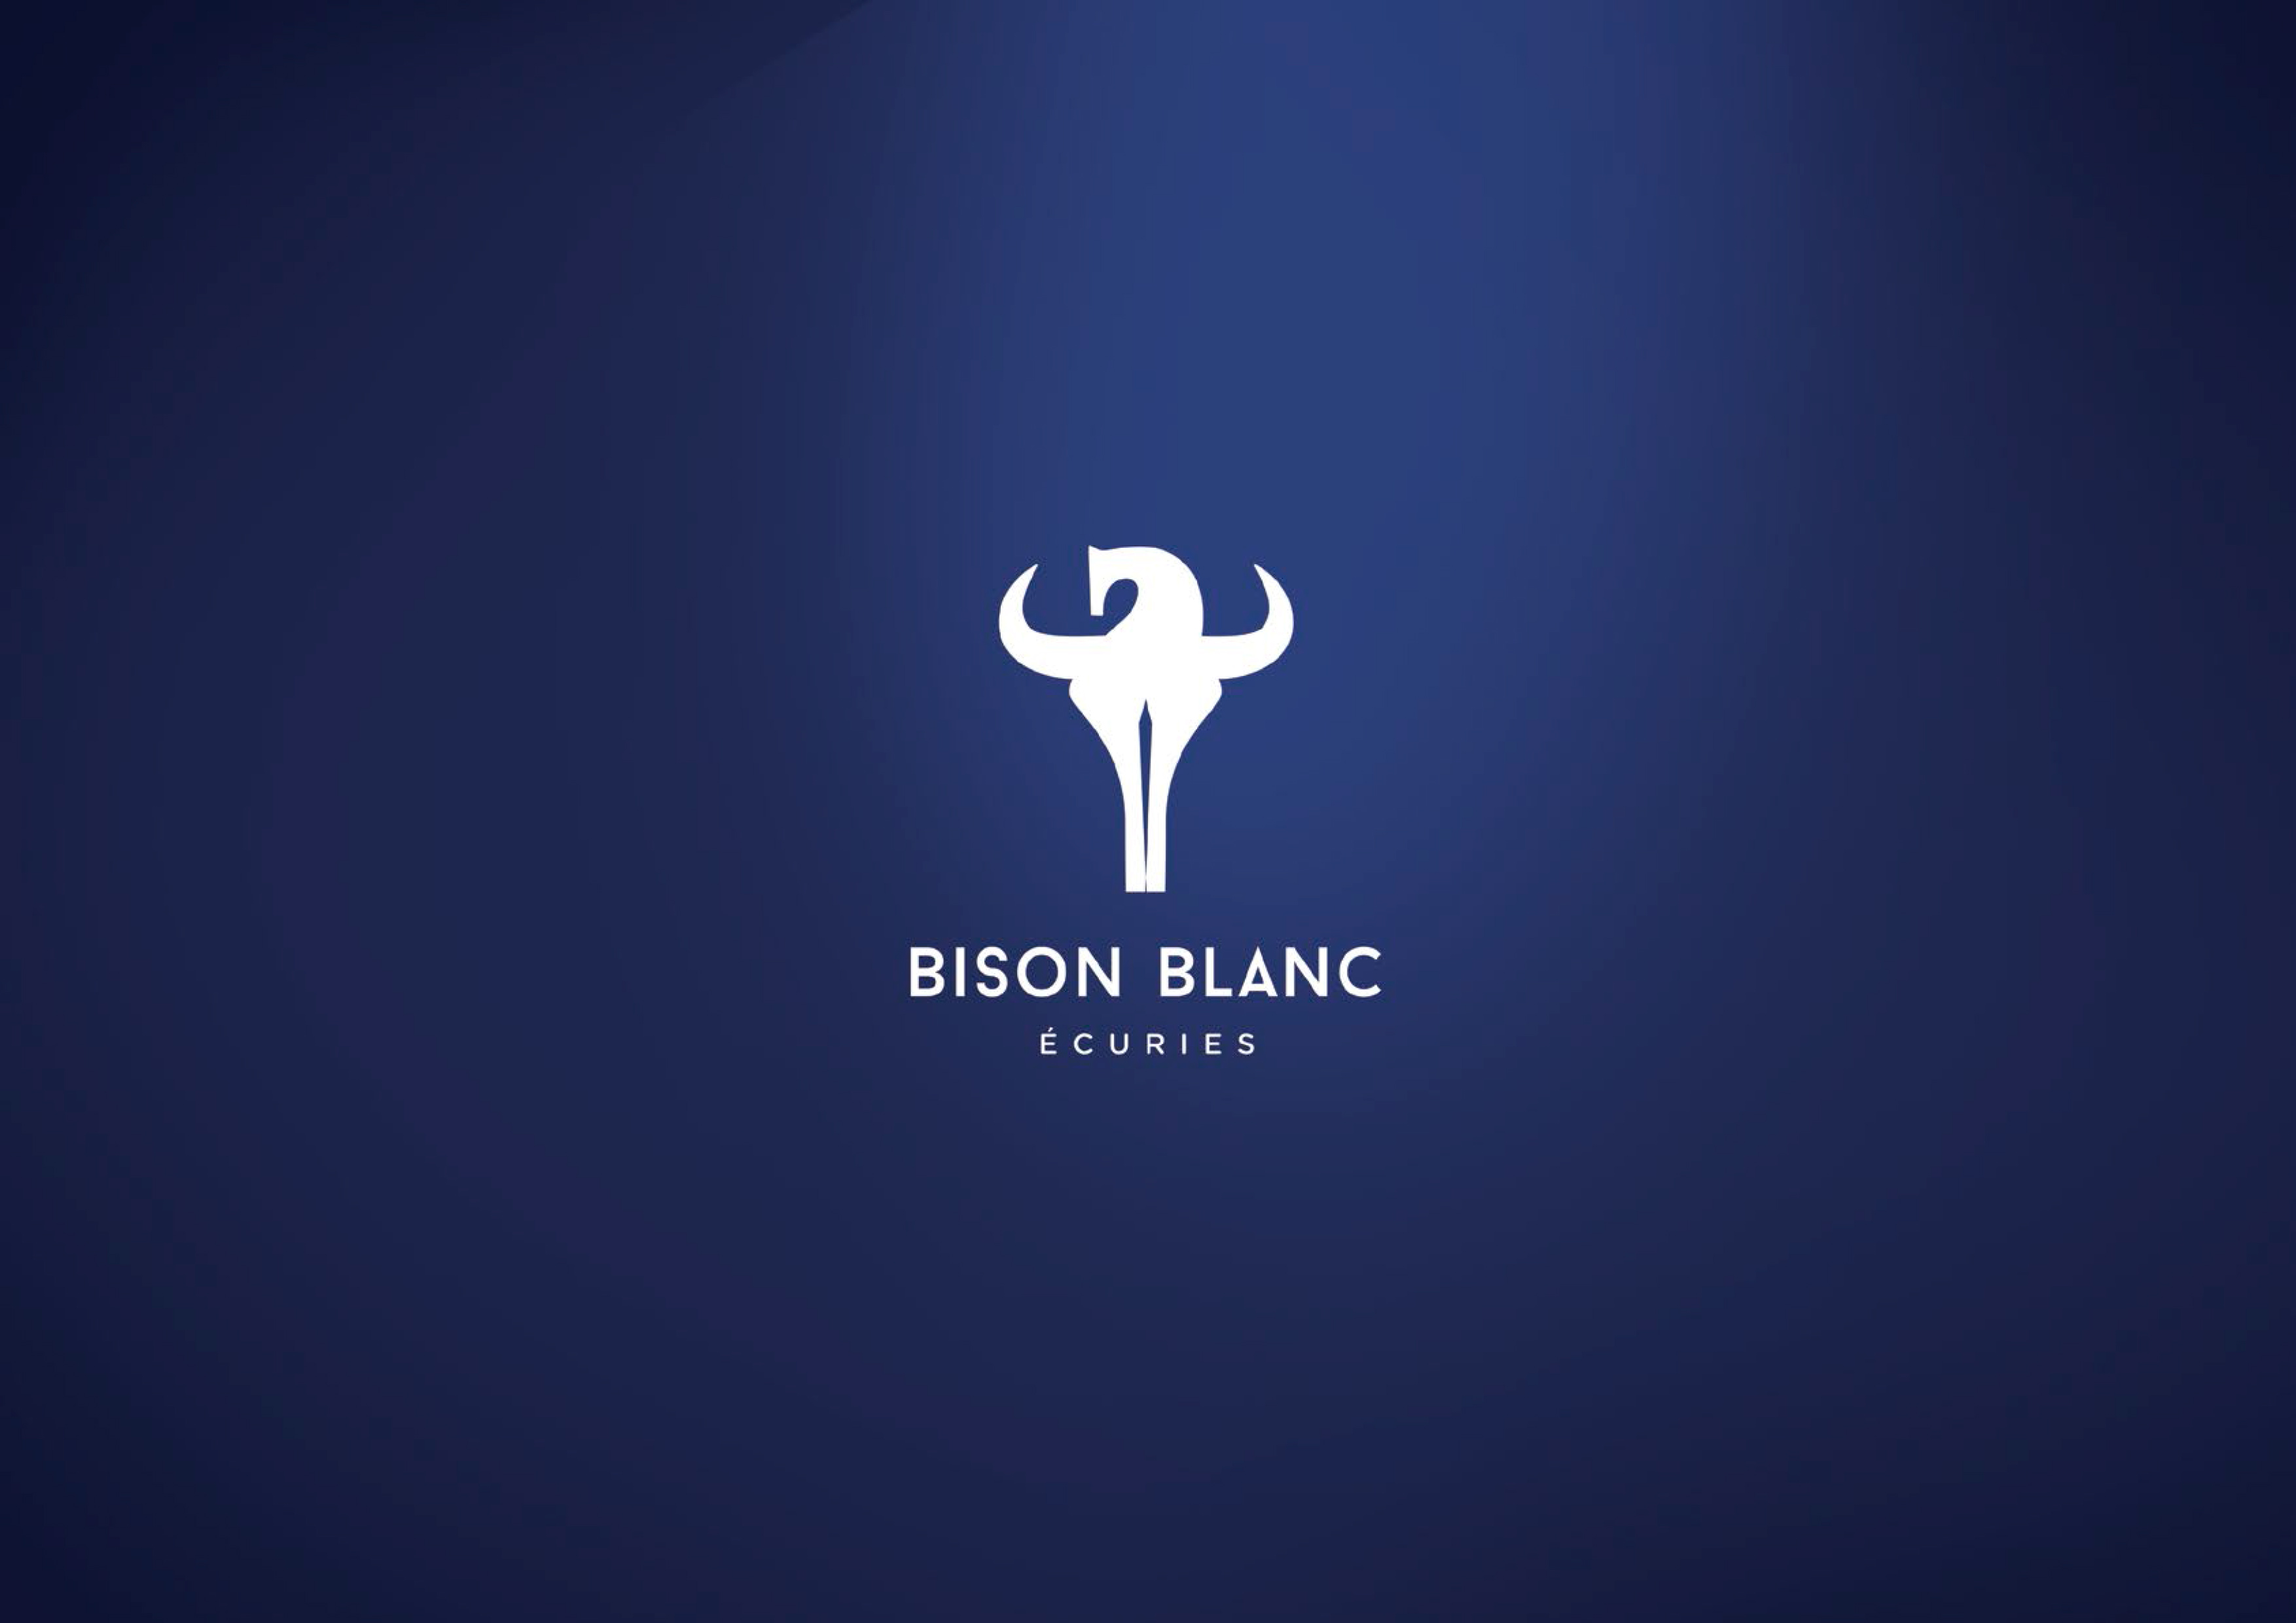 Csakébon - Bison Blanc - All rights reserved